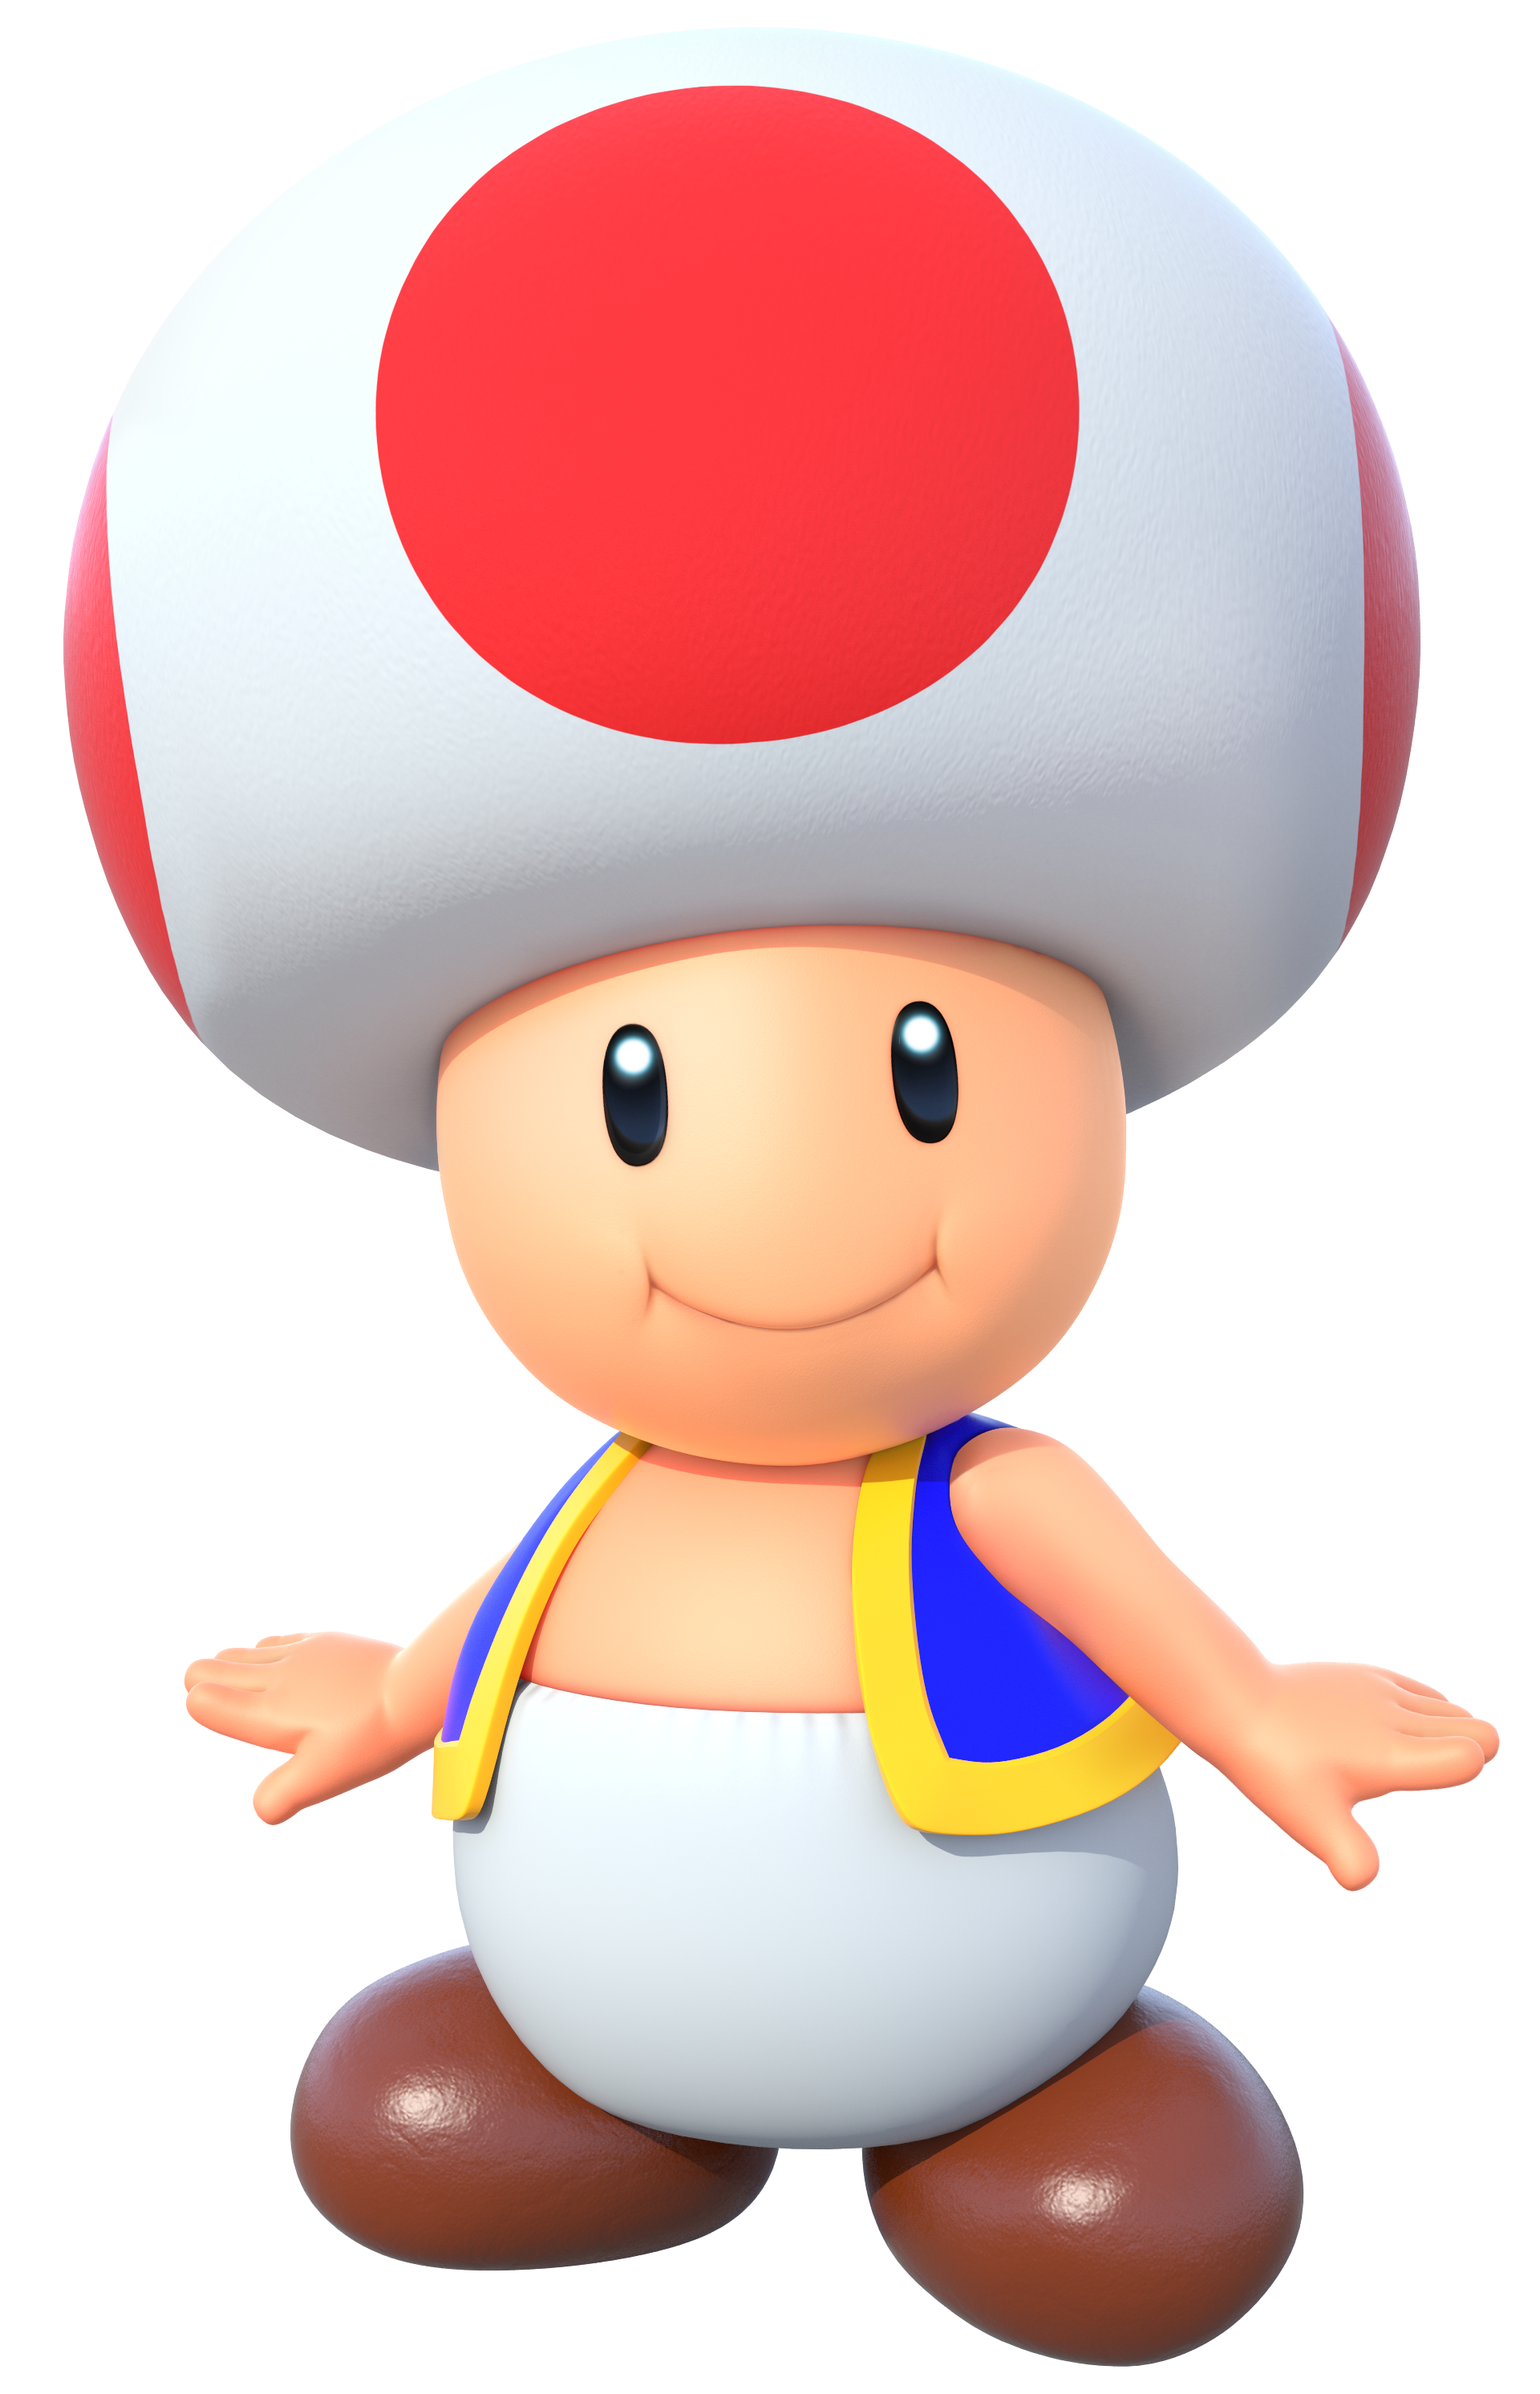 Mario - Wikipedia